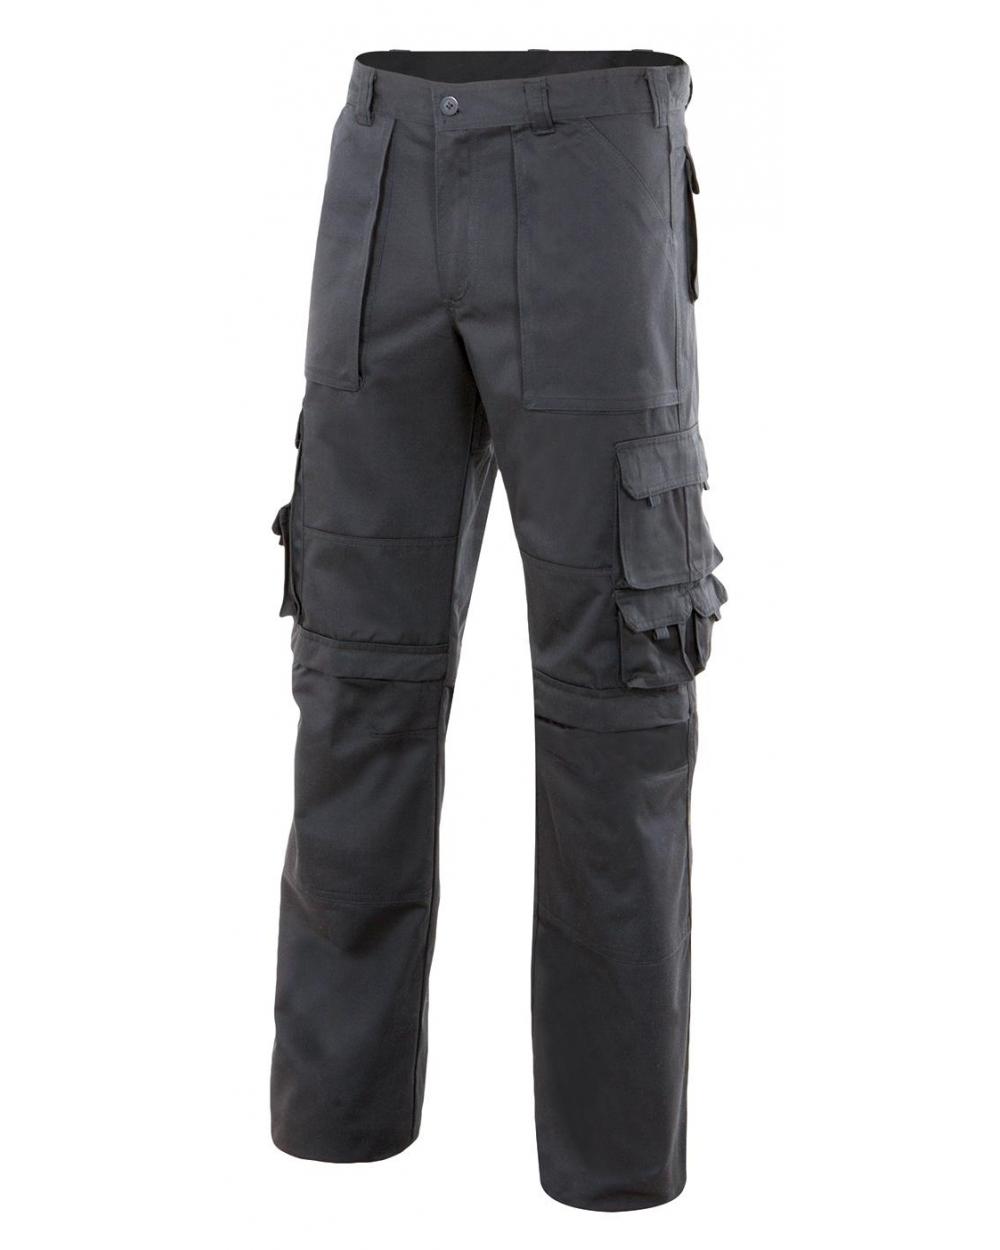 Comprar Pantalón multibolsillos con refuerzo de tejido serie 103016 online barato Negro